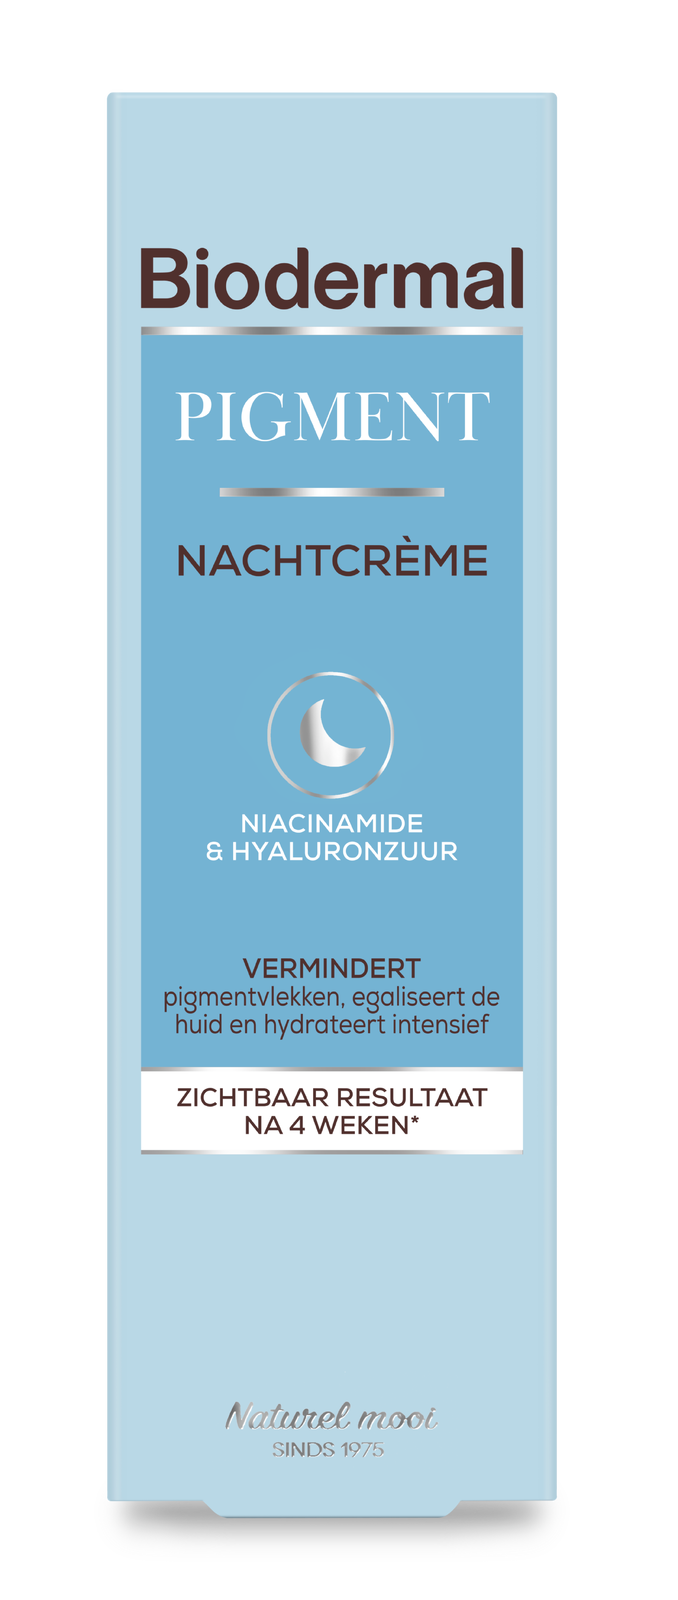 Biodermal Pigment Nachtcrème met Niacinamide & Hyaluronzuur